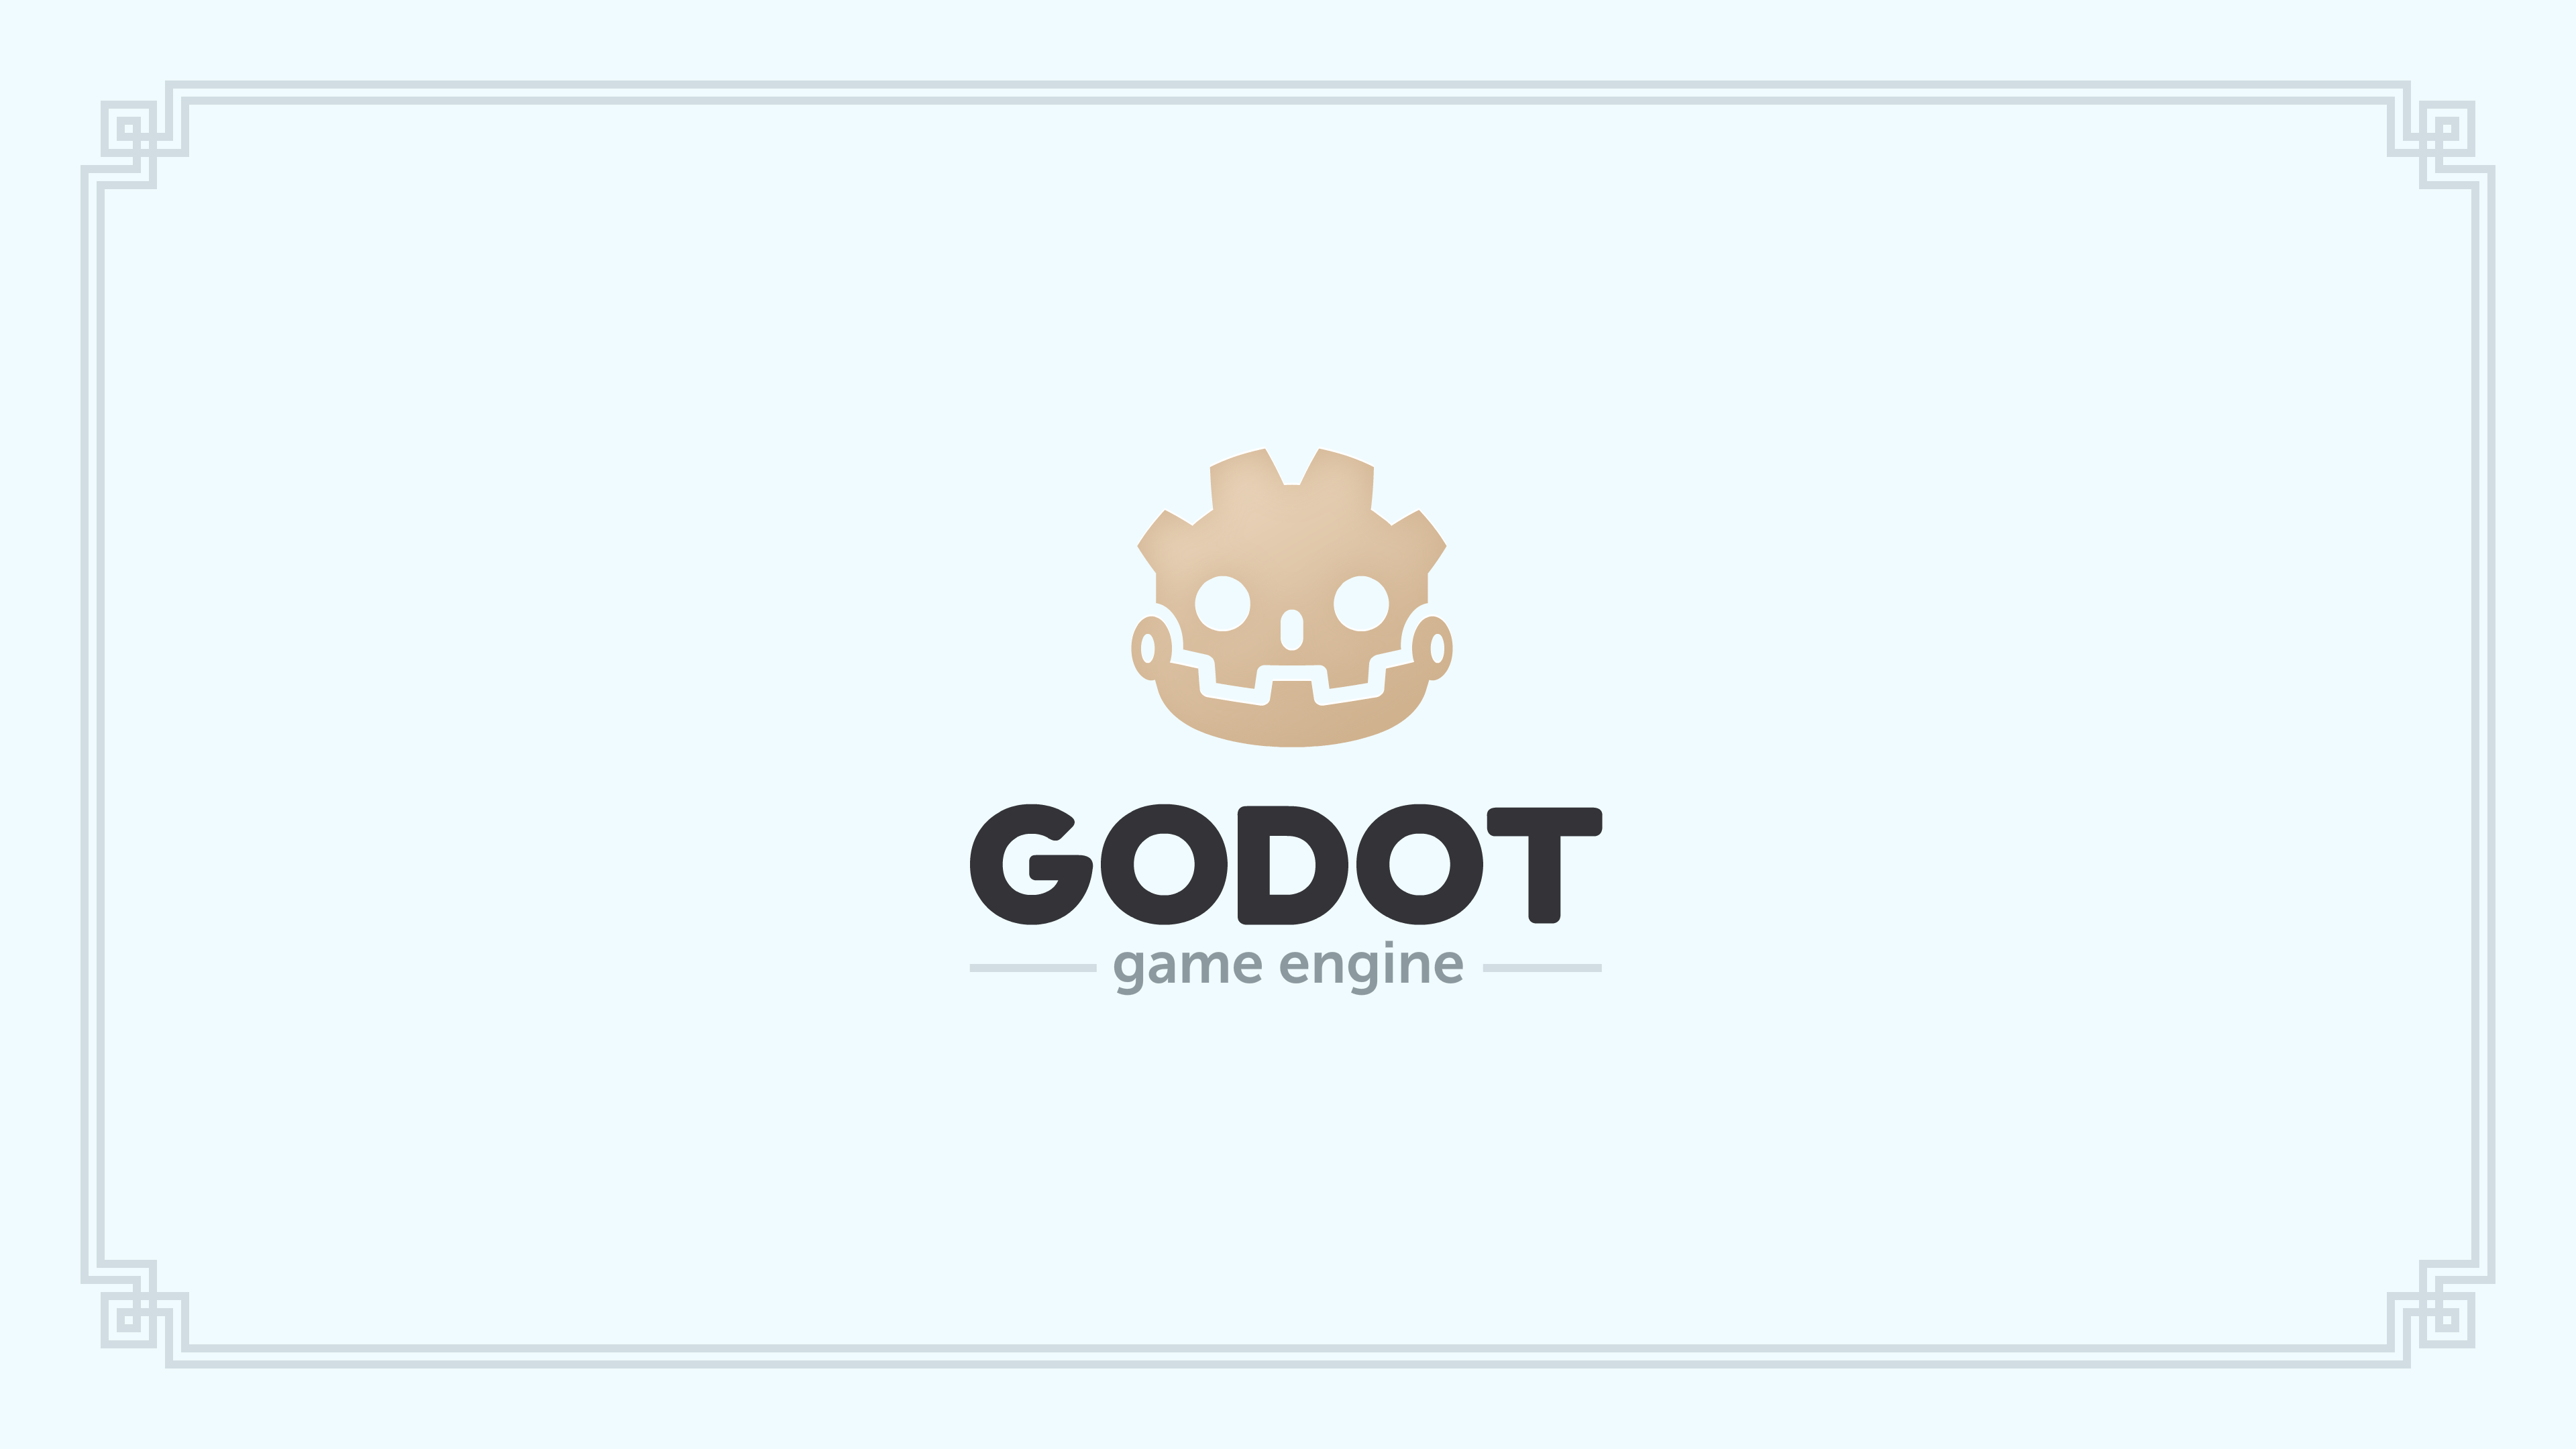 File:Godot splash screen reimagined logo fancy.png - Wikimedia Commons